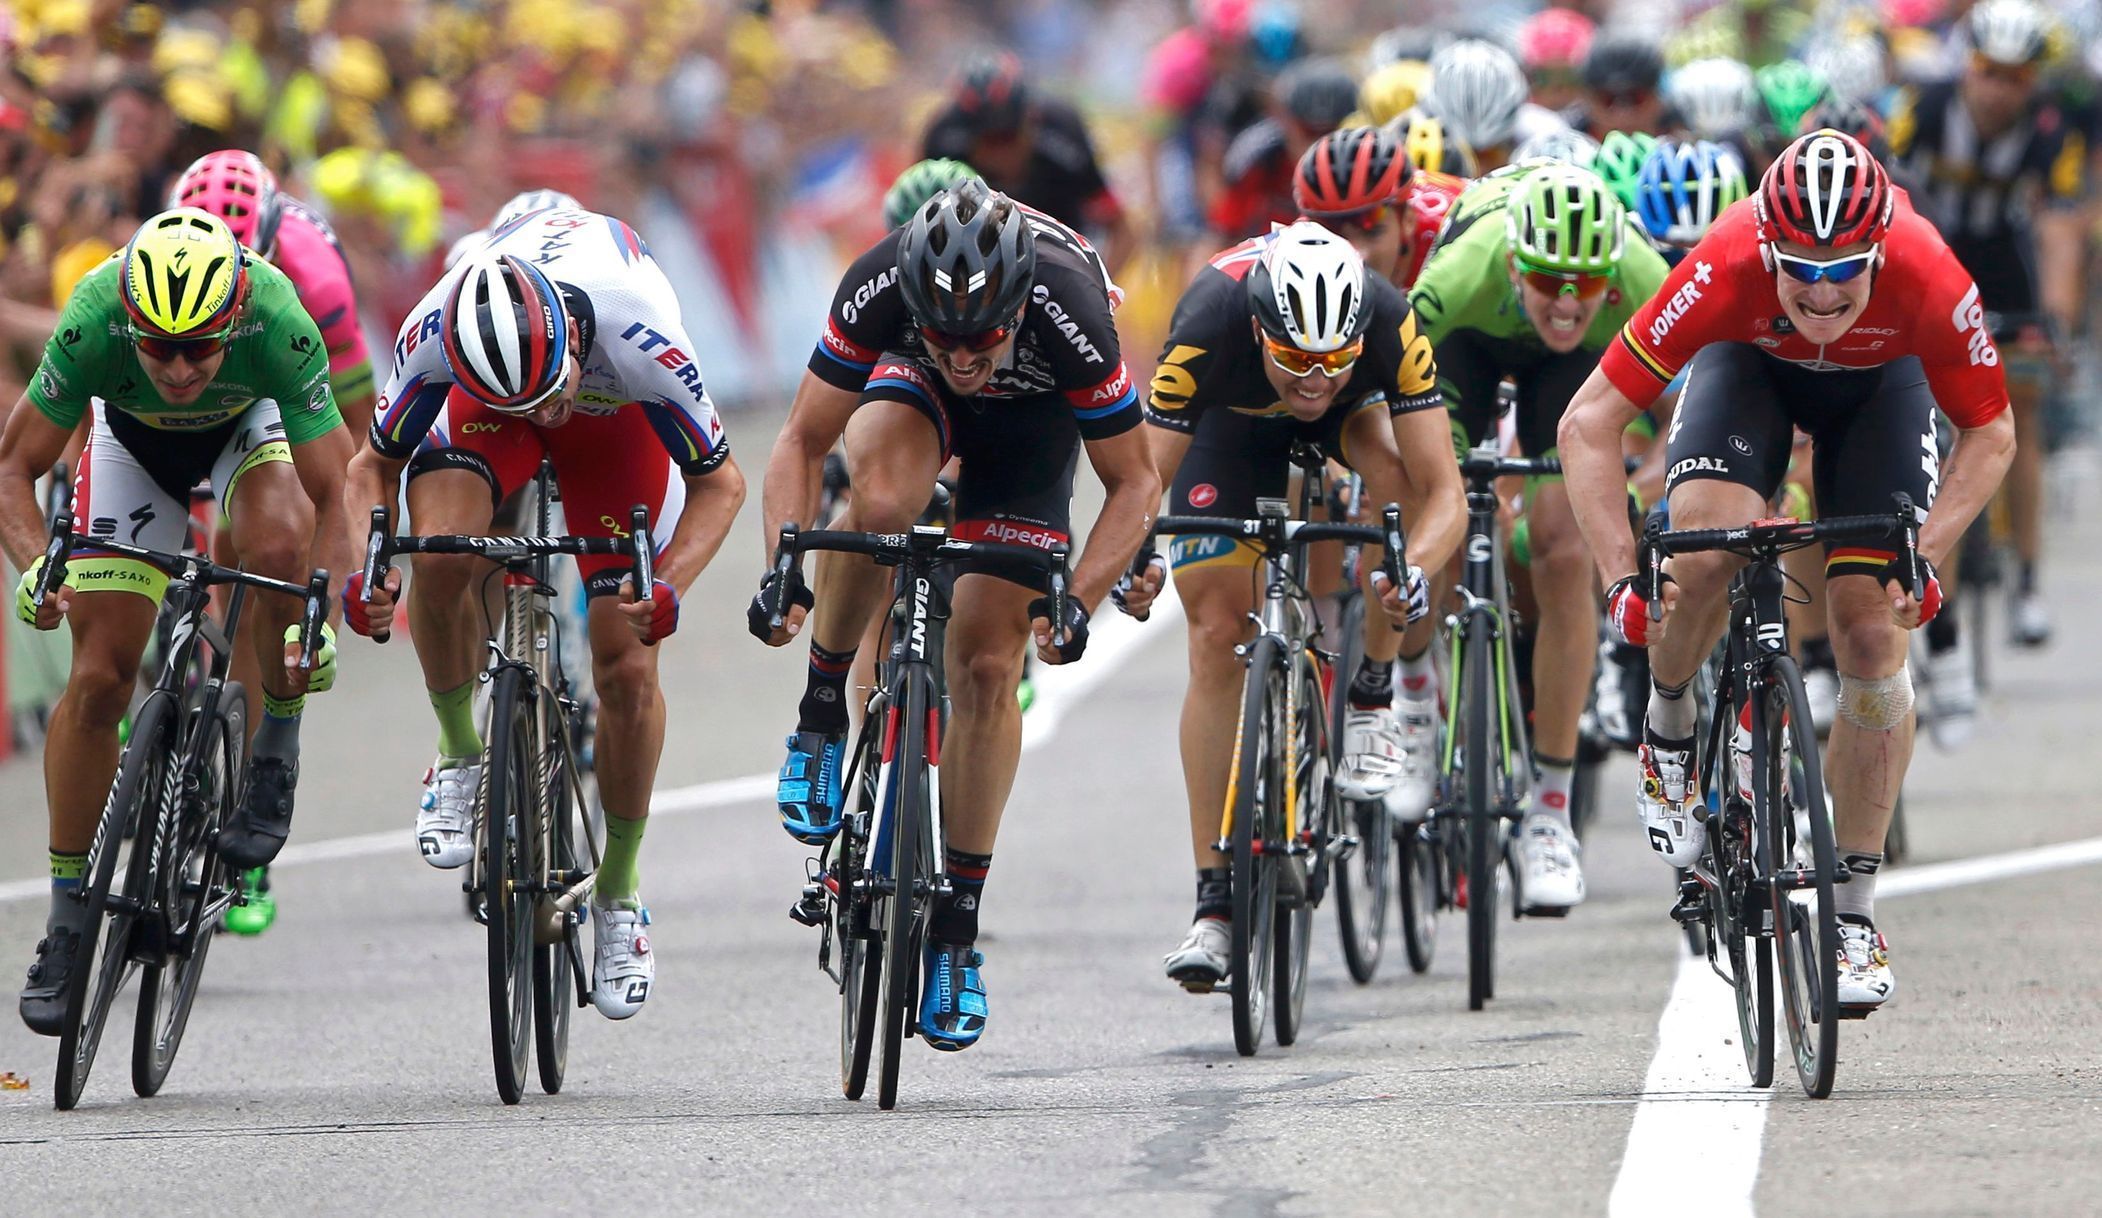 Zleva: Sagan, Kristoff, Degenkolb a vítězný Greipel v dojezdu 15. etapy Tour de France 2015